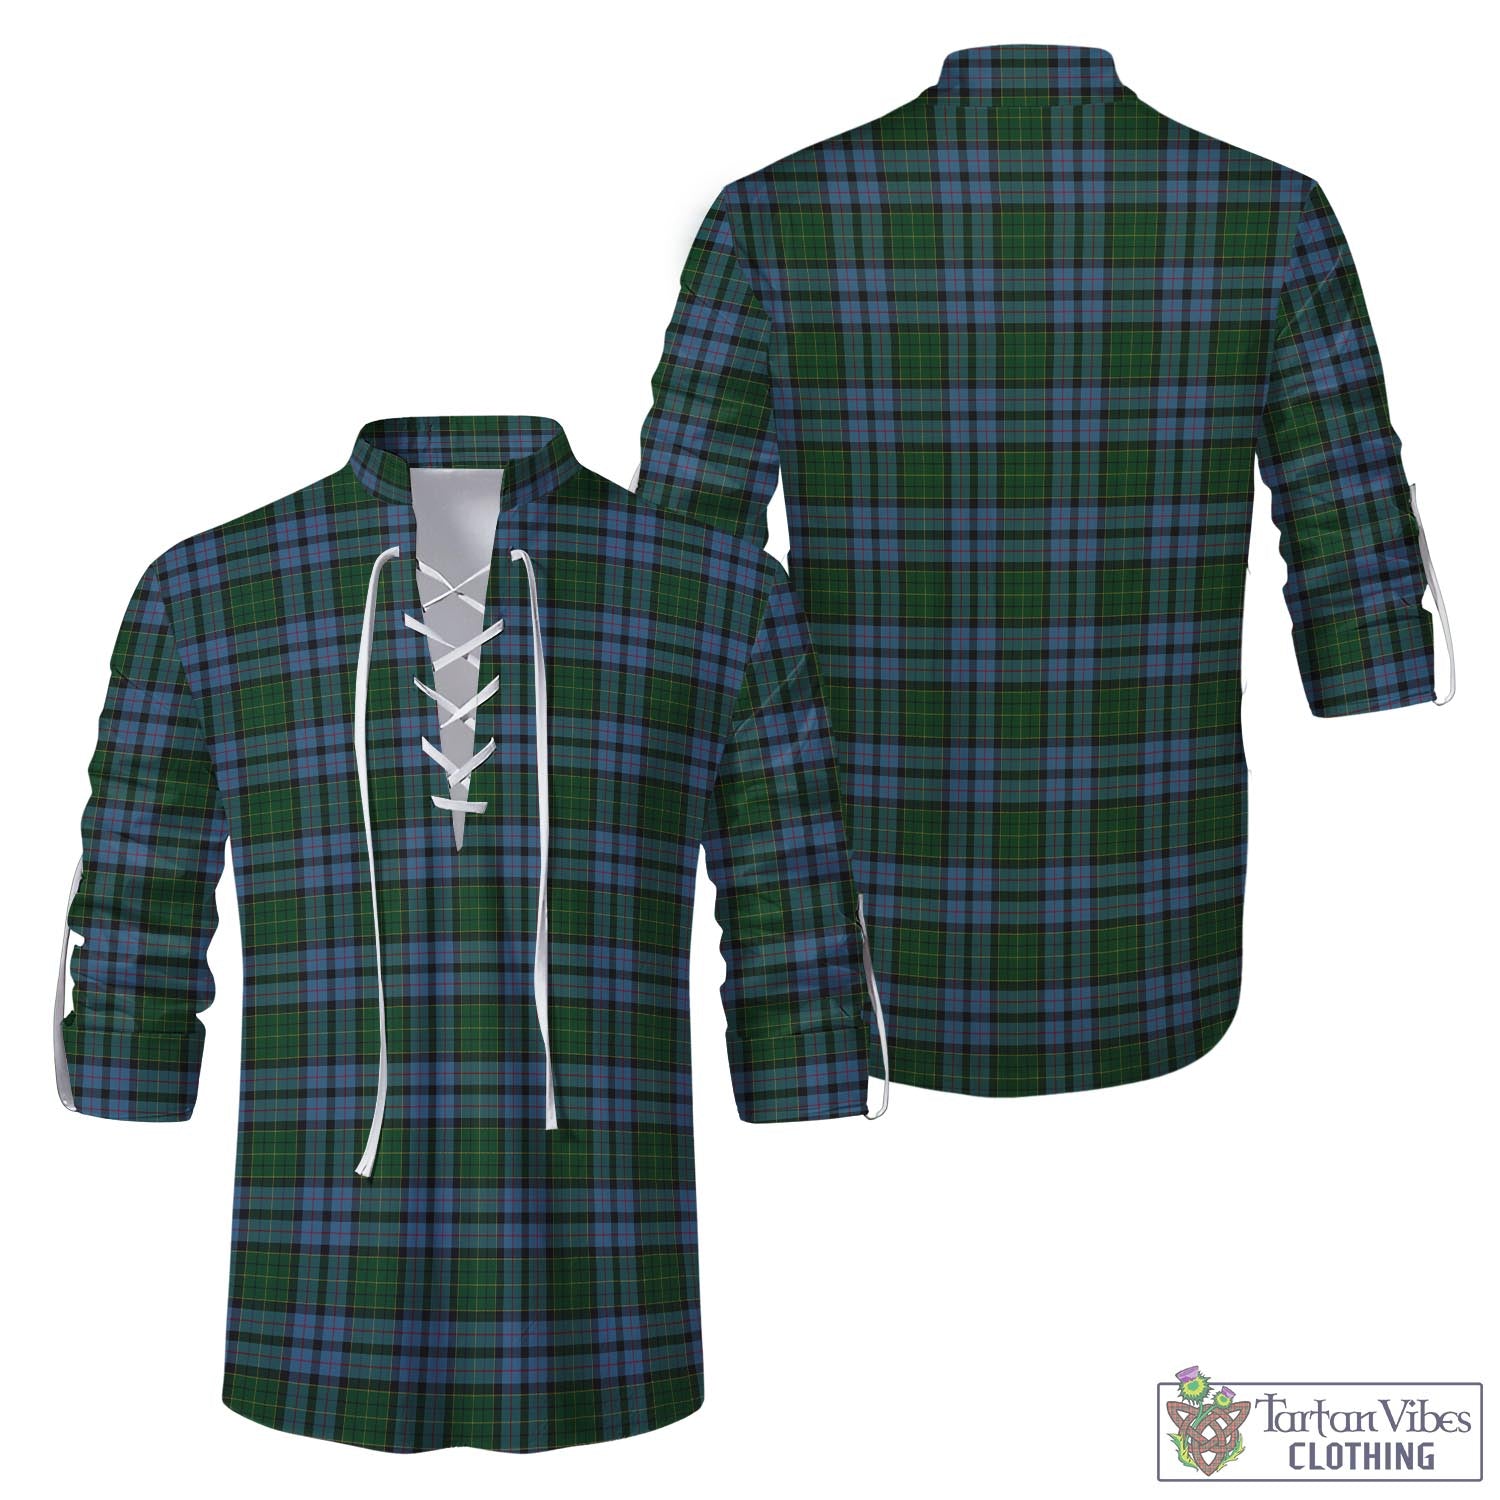 Tartan Vibes Clothing Forsyth Tartan Men's Scottish Traditional Jacobite Ghillie Kilt Shirt